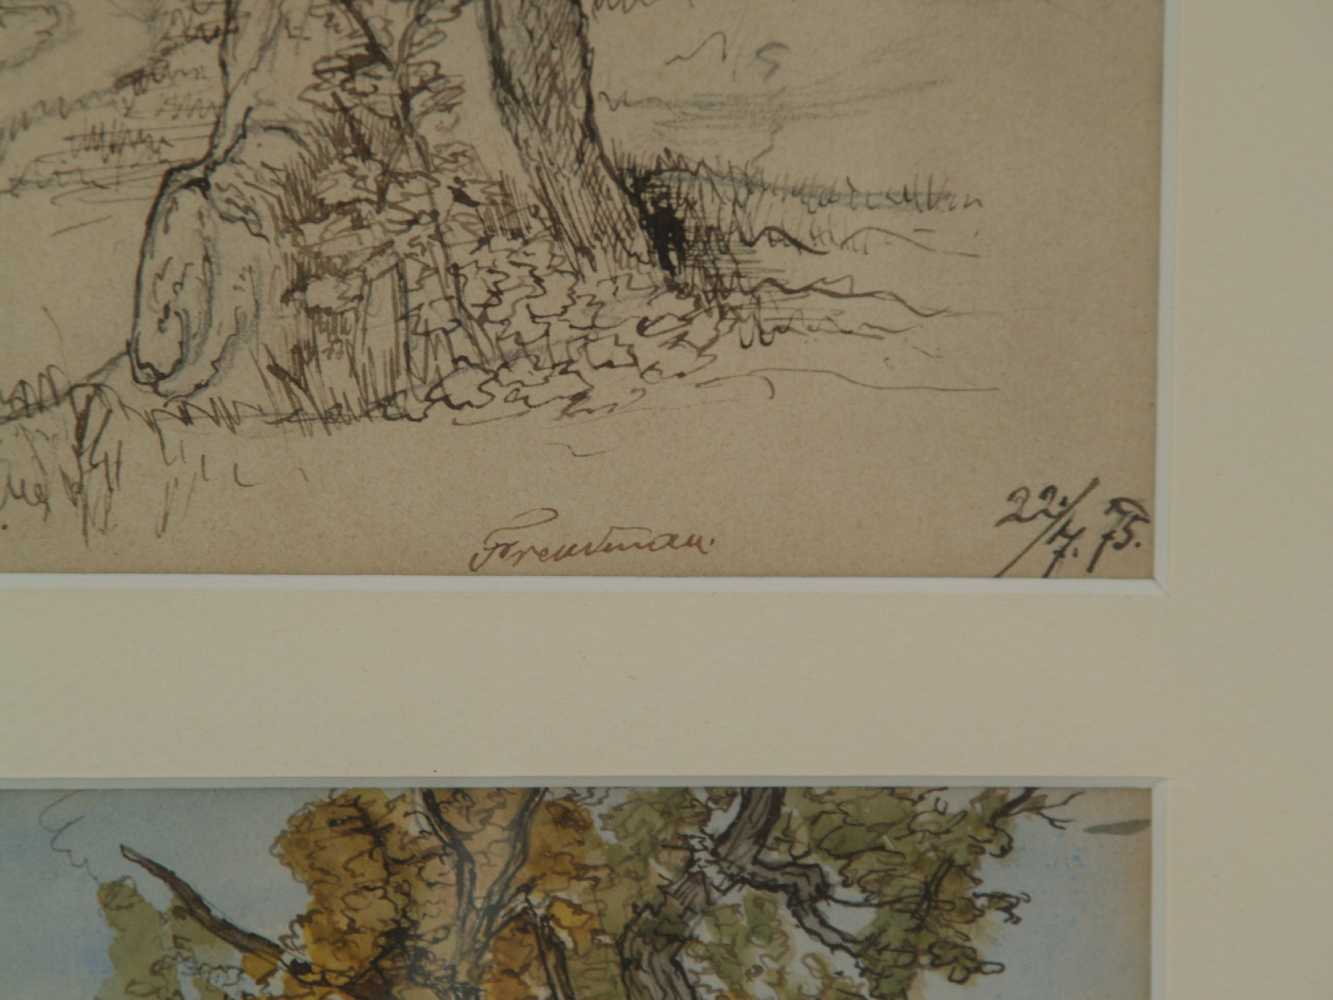 Freudmann u.a. - Vier Baumstudien,div.Techniken auf Papier:Feder,Bleistift,Aquarell,signiert ,2x - Image 4 of 5